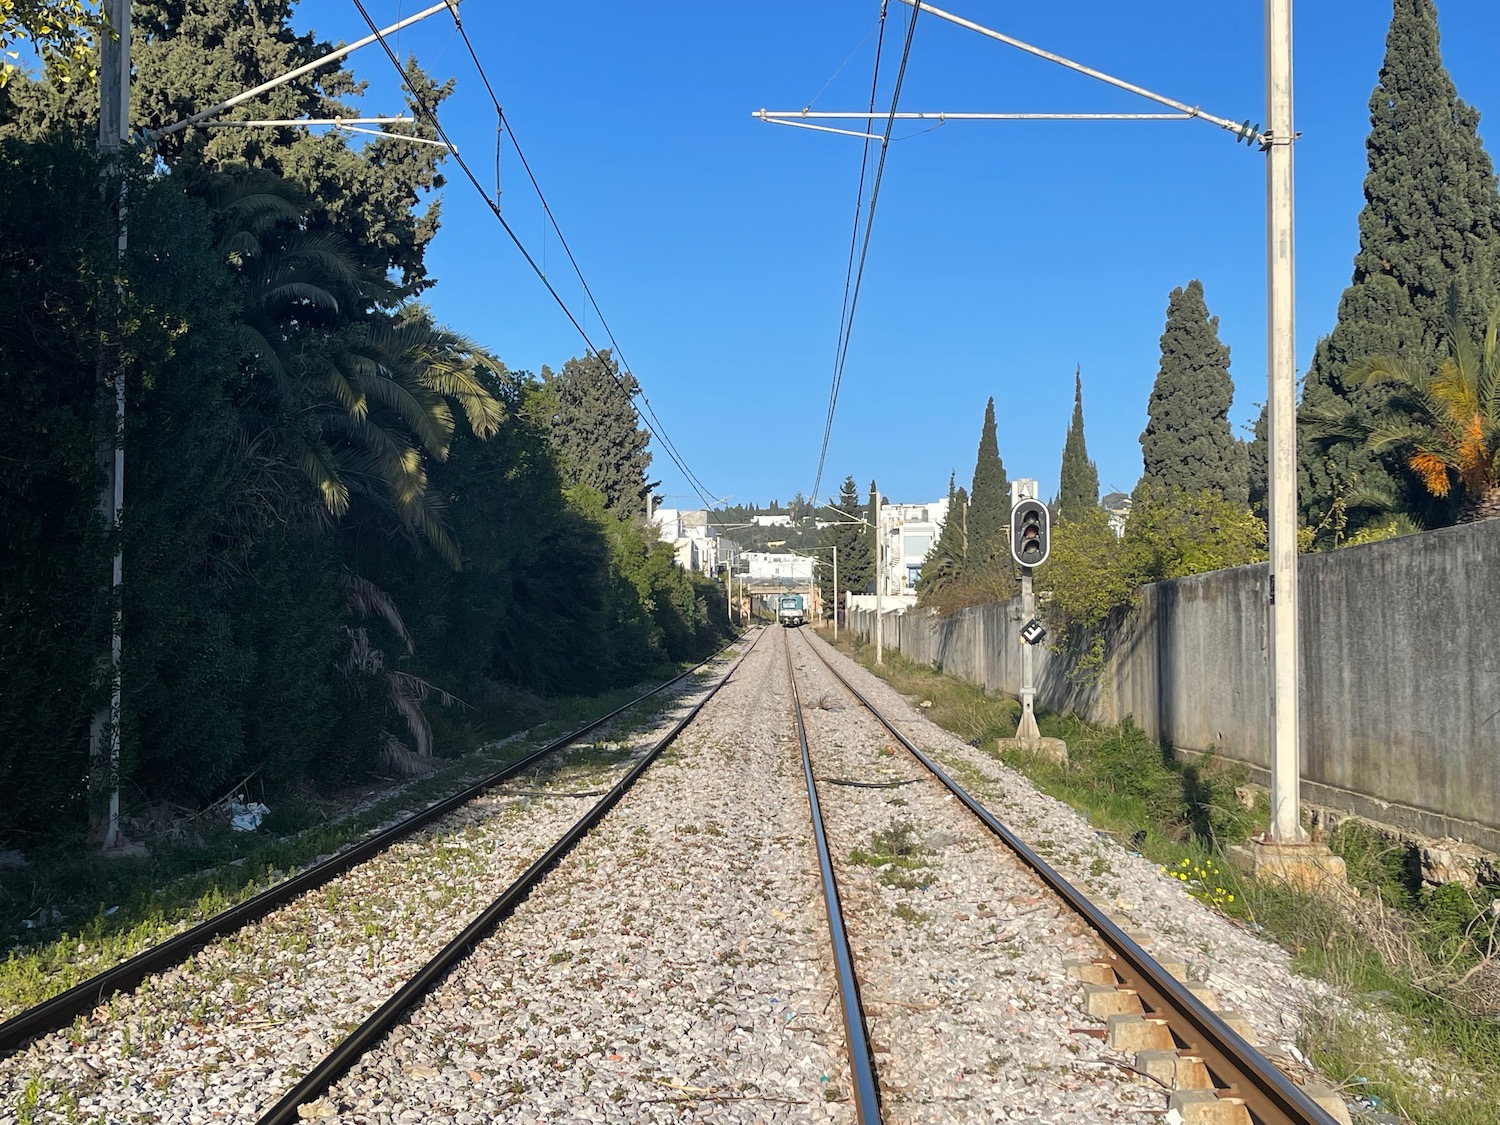 train tracks with trees and a blue sky